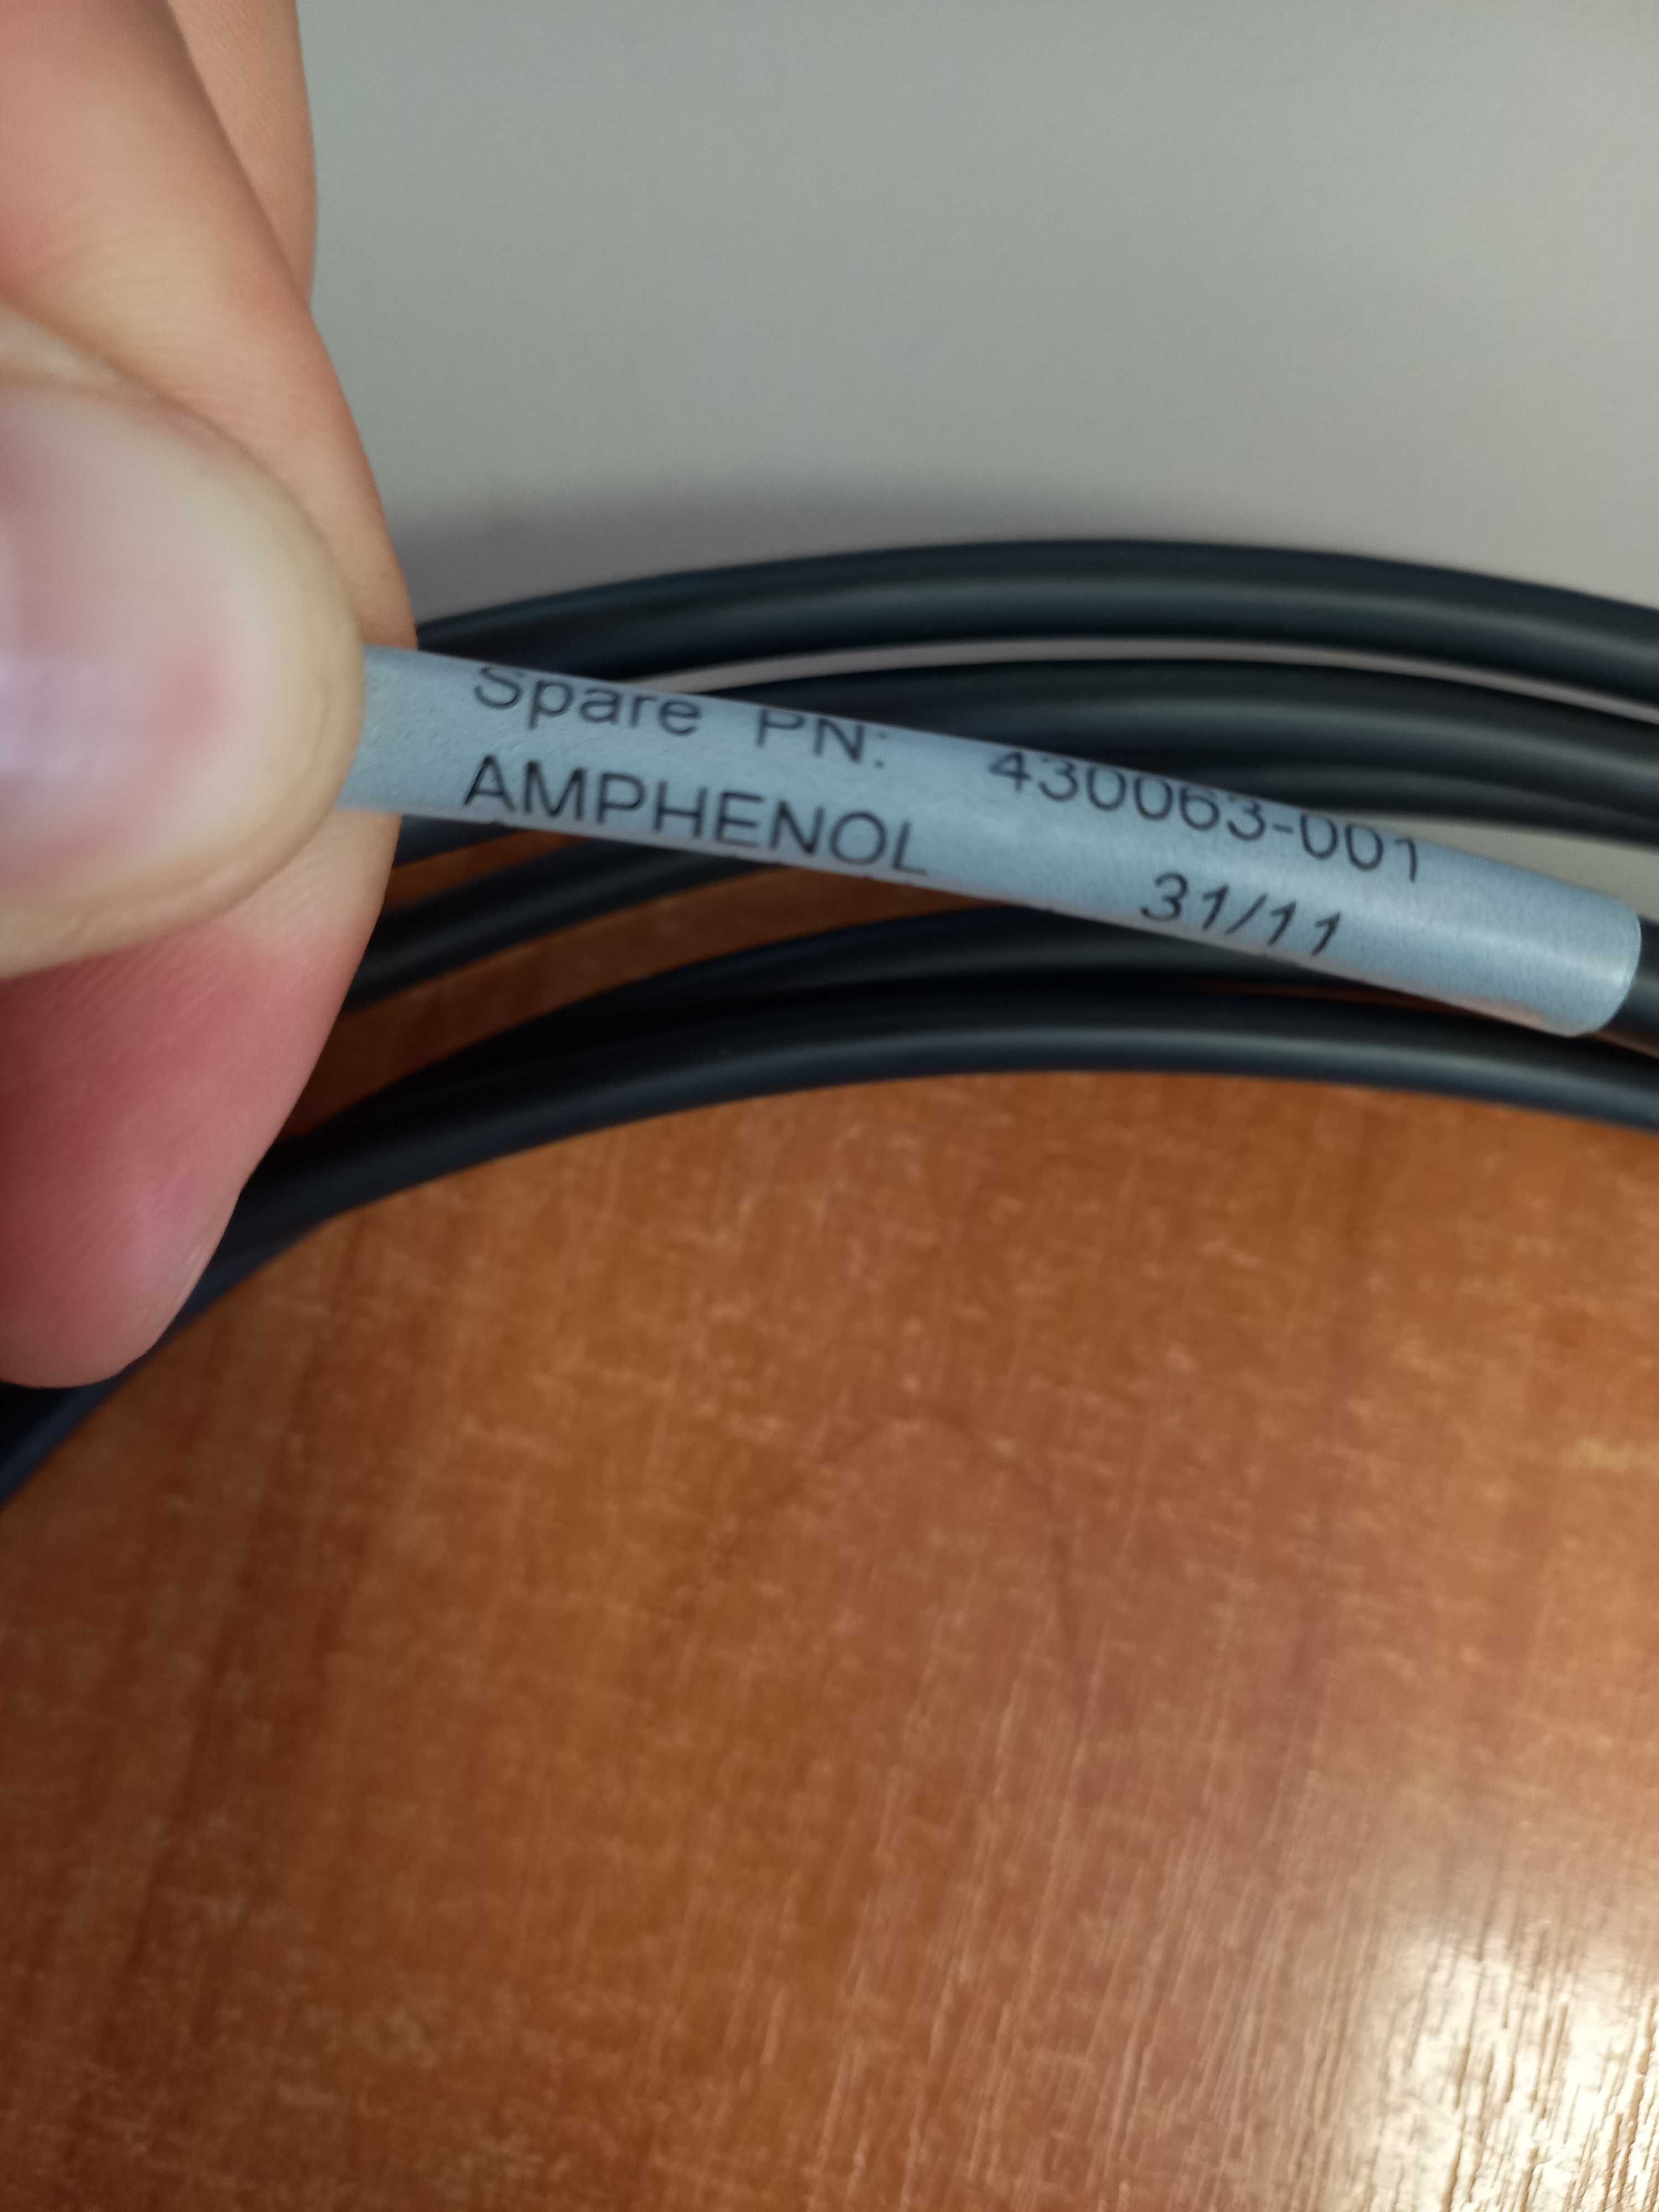 HP SAS MIN-MIN kabel taśmowy, okazja! 4 3 0 0 6 3 - 0 0 1